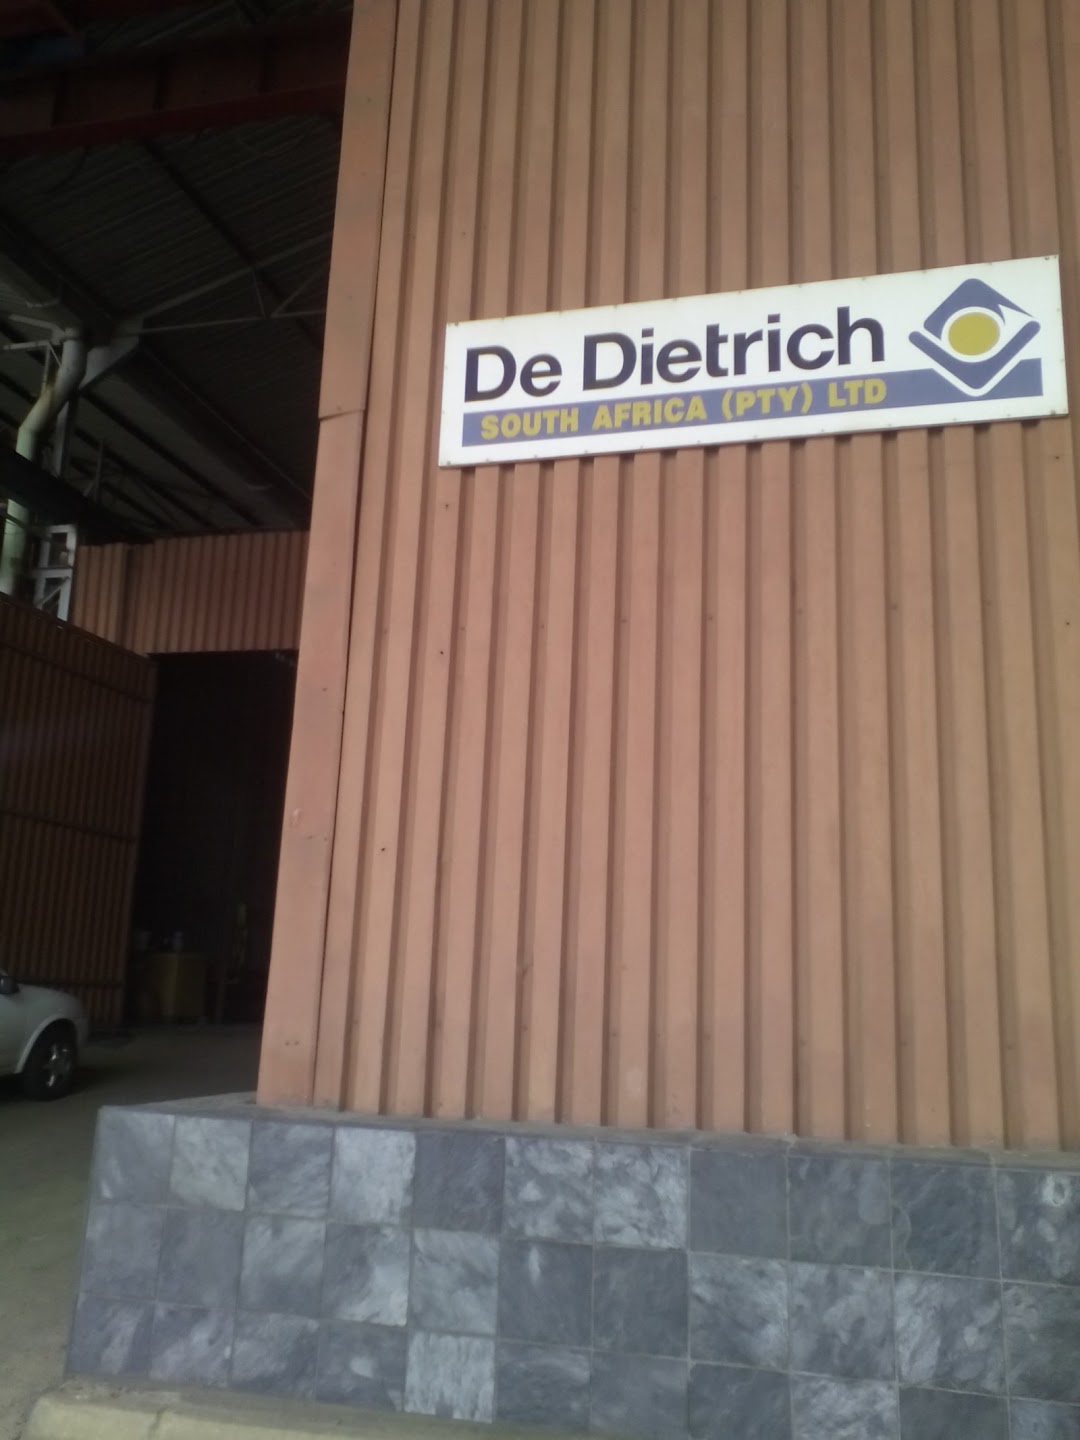 De Dietrich South Africa Pty Ltd